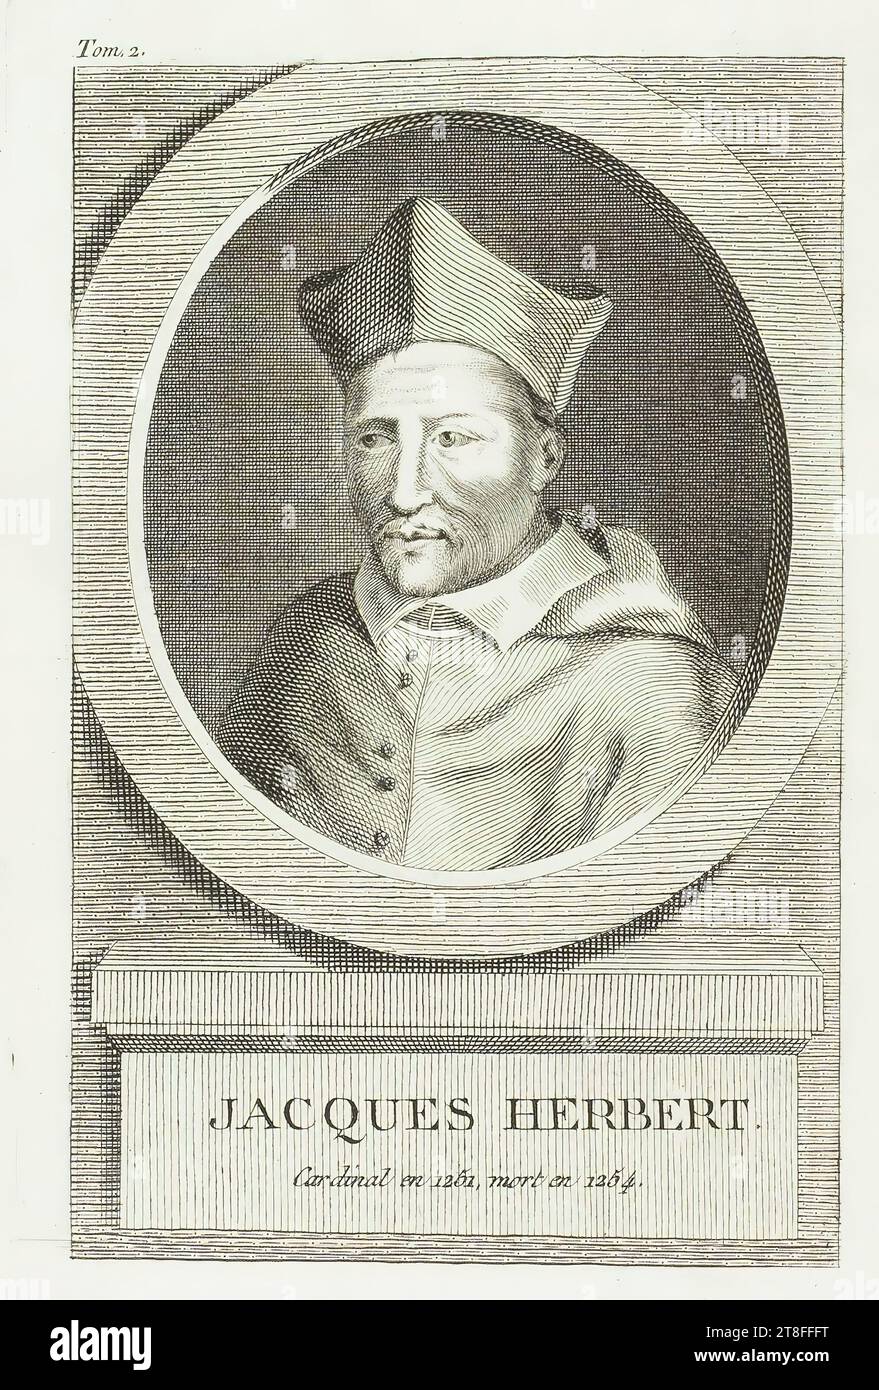 JACQUES HERBERT, cardinal en 1251, meurt en 1254. Tom. 2 Banque D'Images